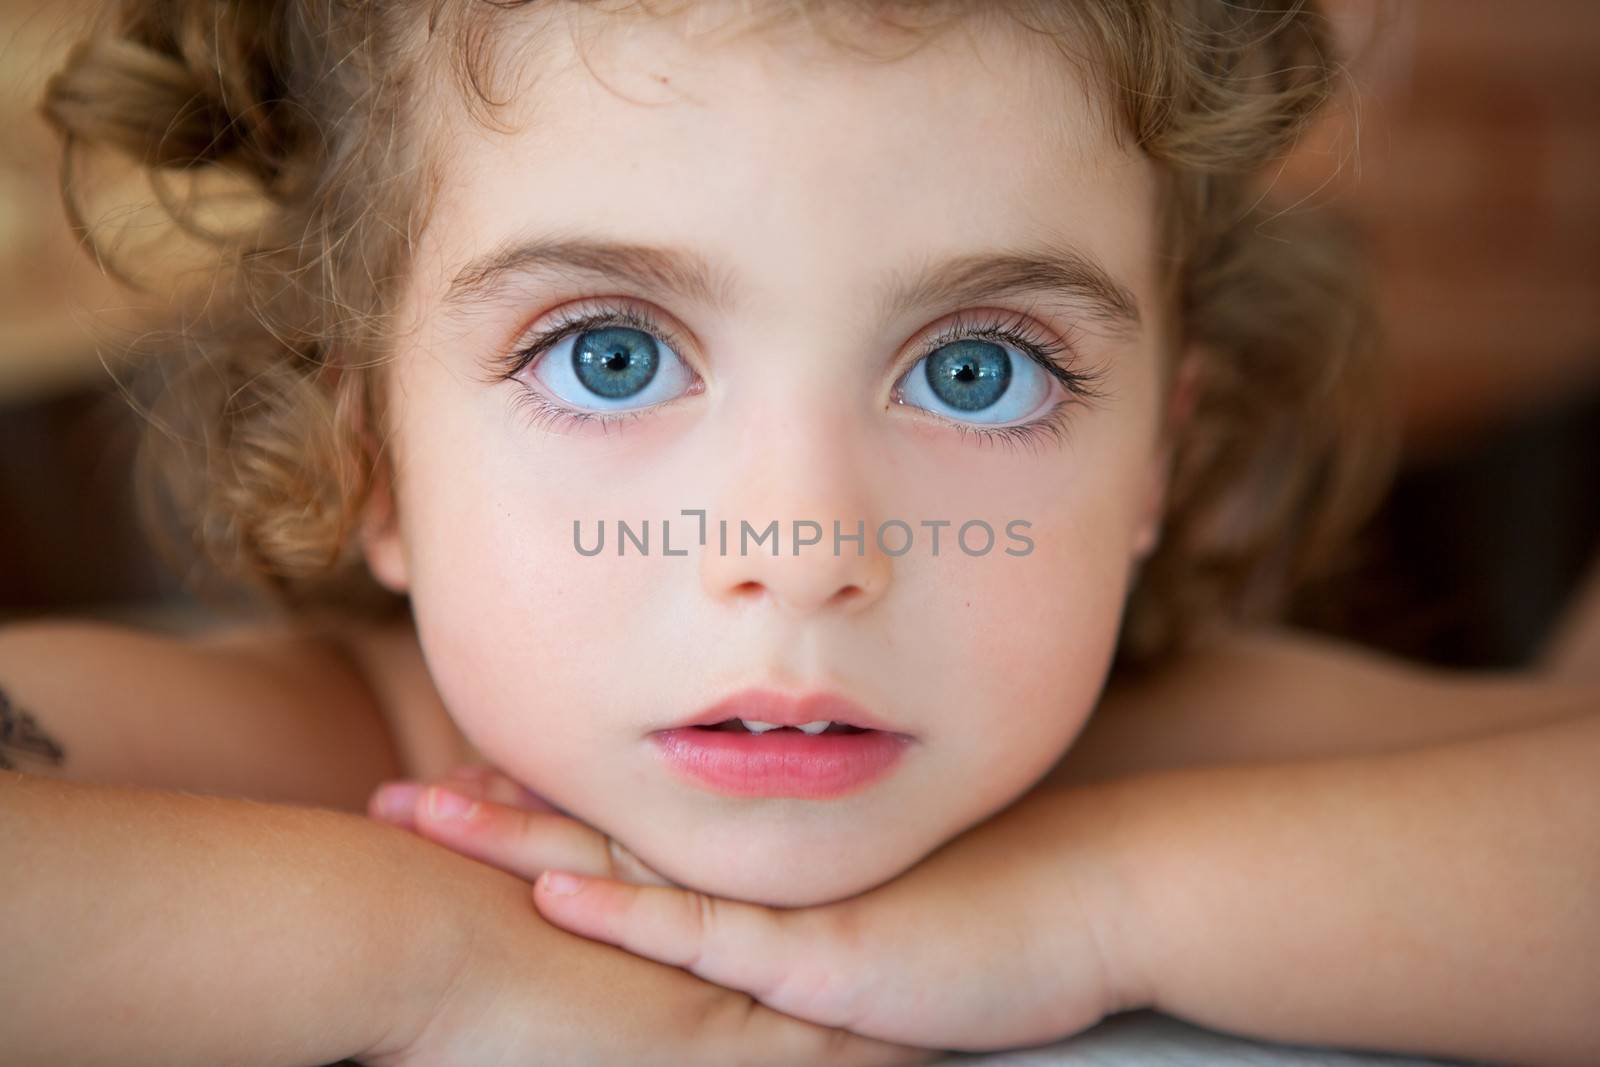 big blue eyes toddler girl looking at camera relaxed